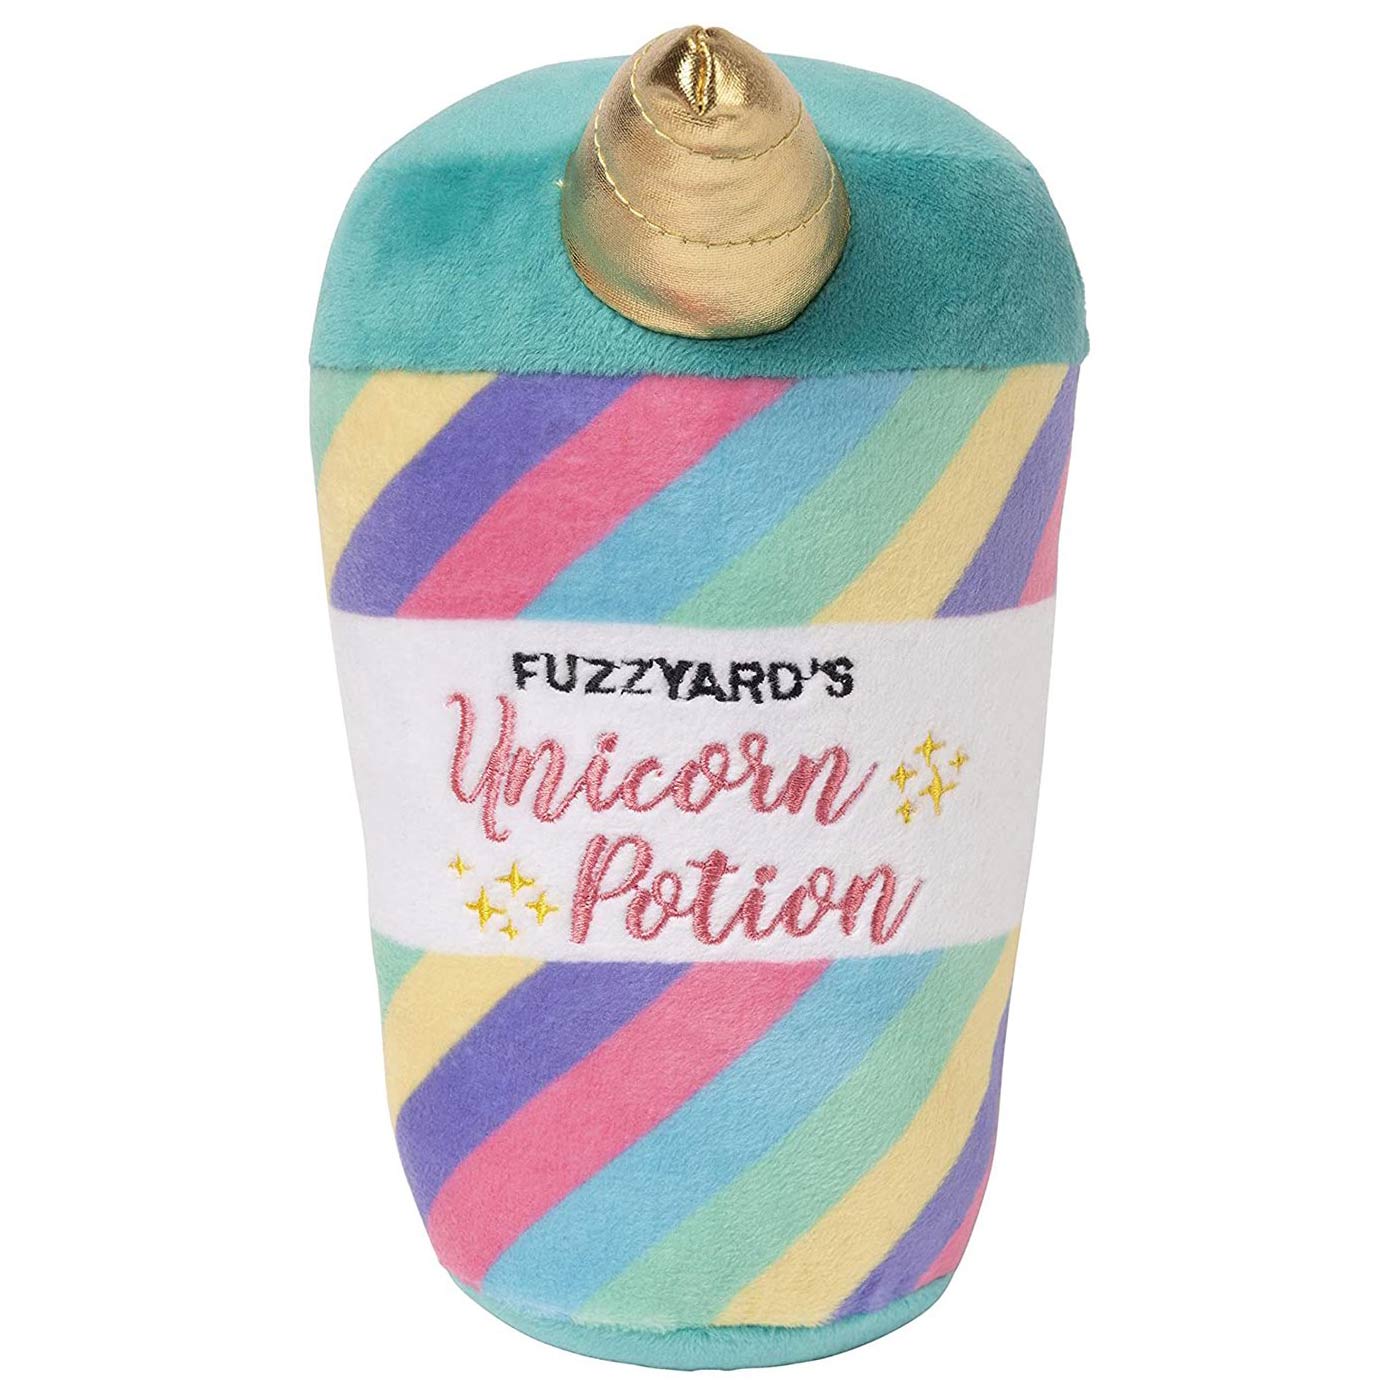 Fuzzyard Unicorn Potion Toy